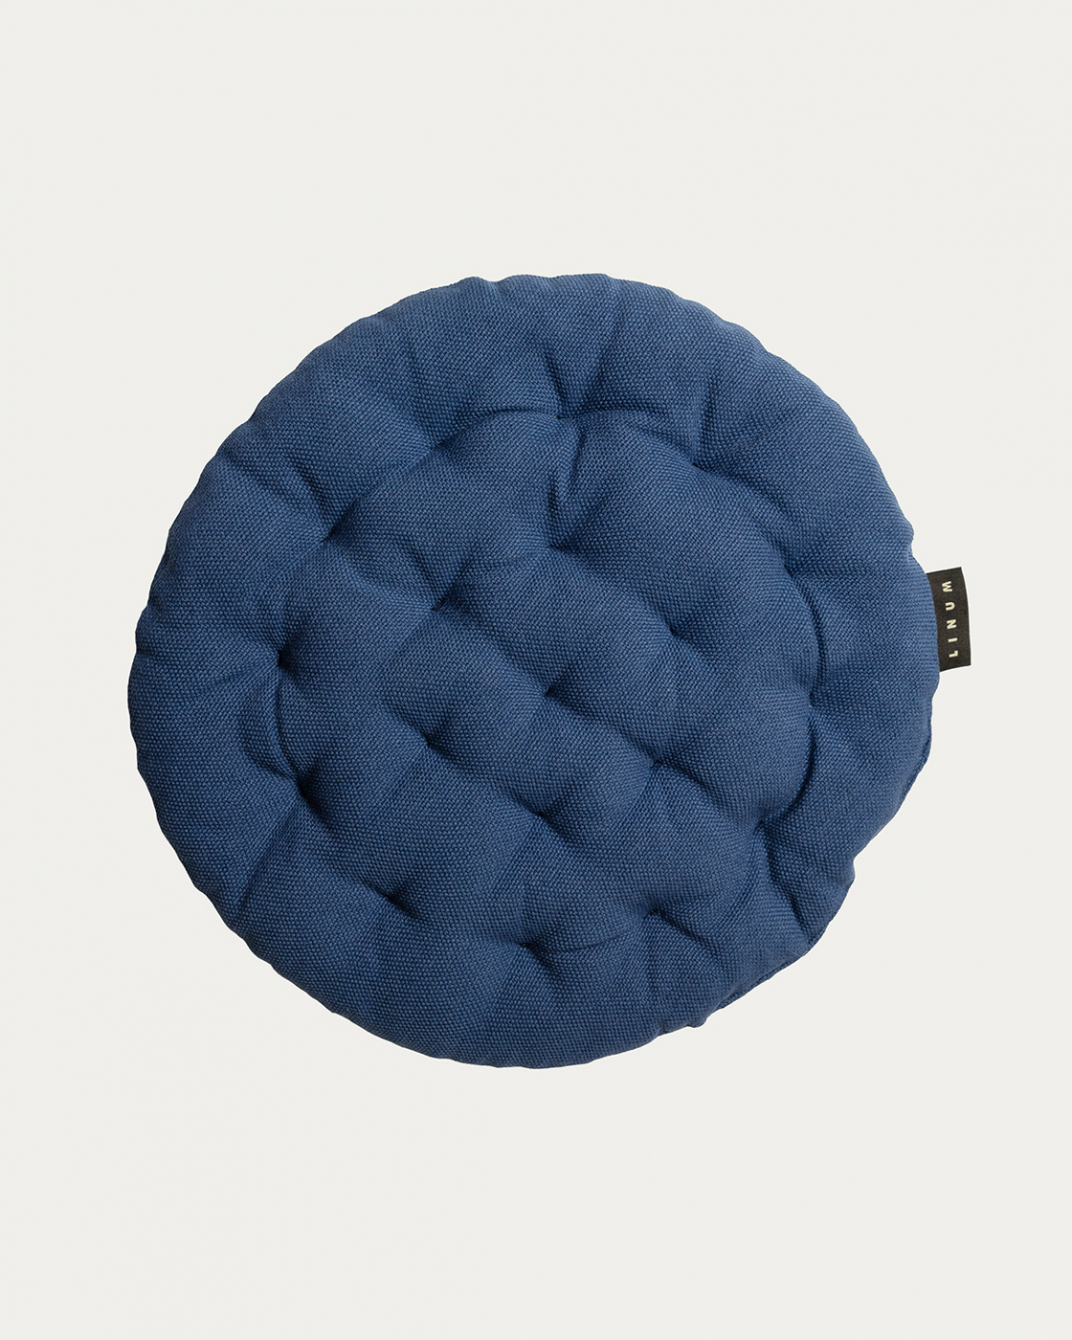 PEPPER Seat cushion ø37 cm Indigo blue